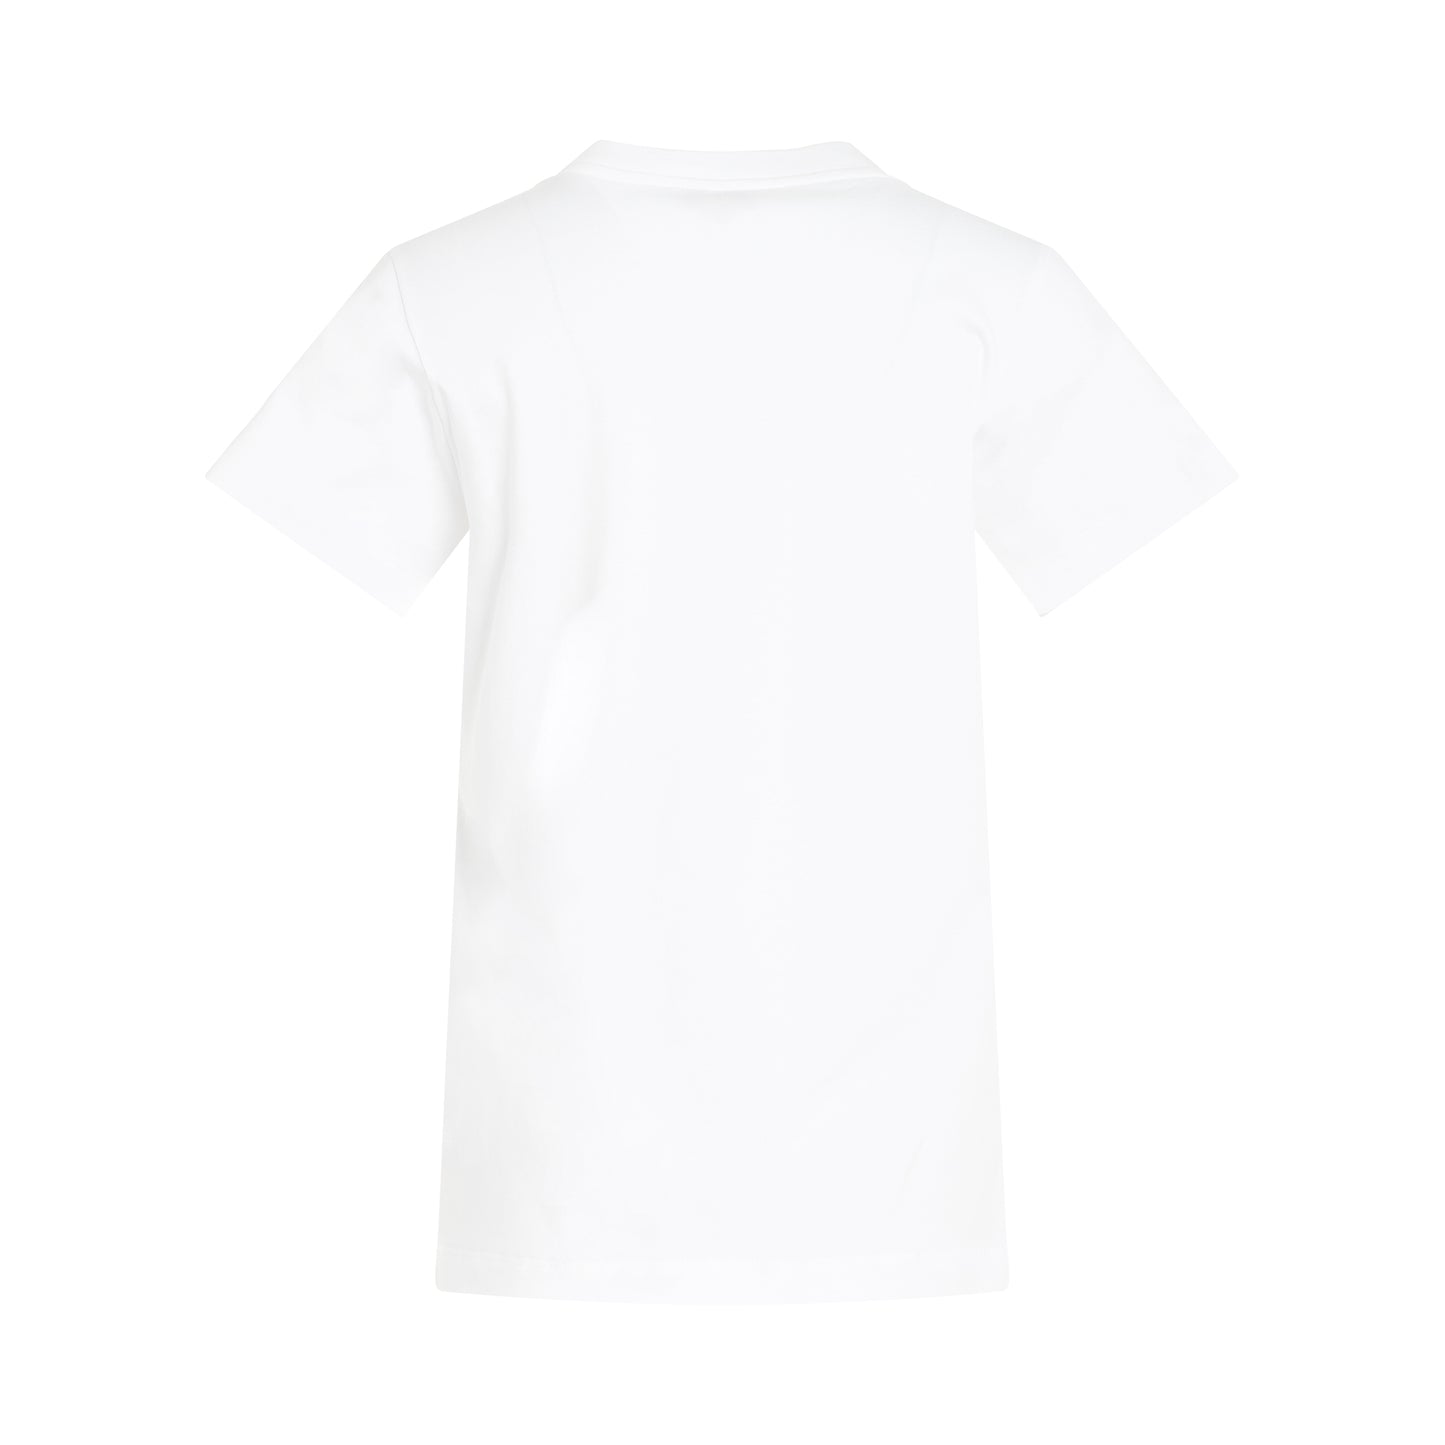 Warped Print T-Shirt in White